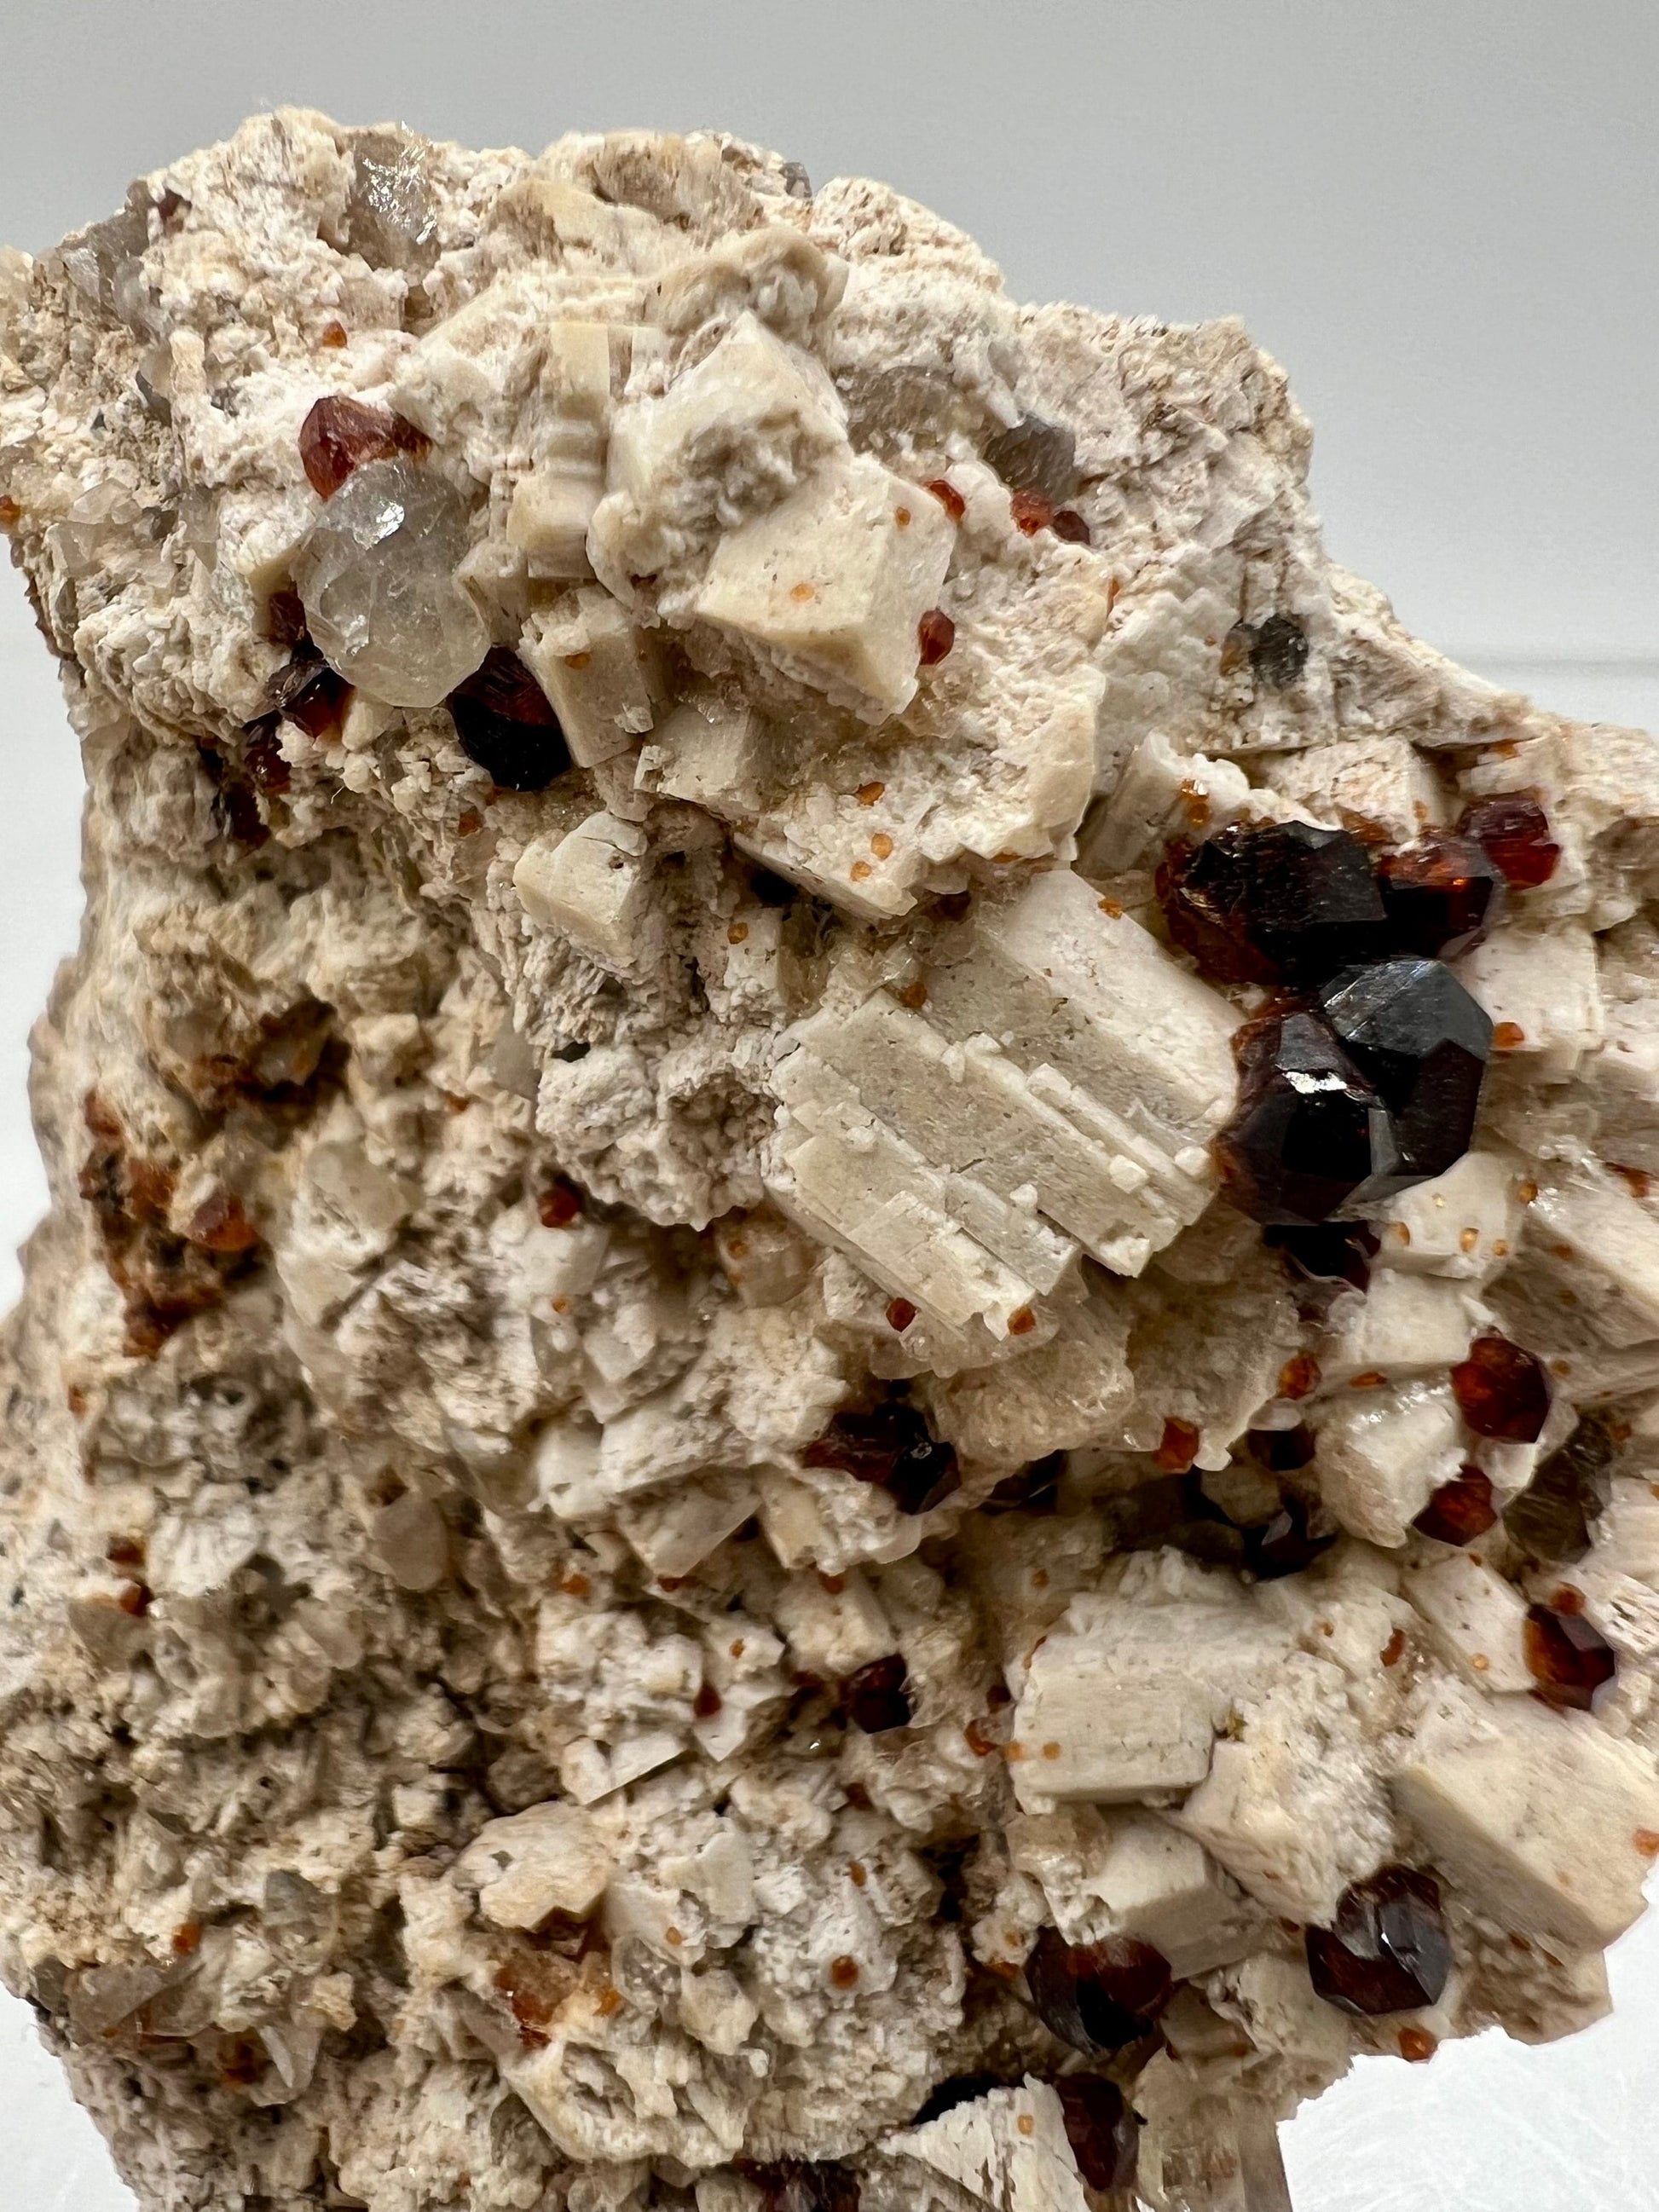 Stunning Garnet, Smoky Quartz, And Hyalite Specimen. Beautiful Spessartine Garnet With UV Reactive Hyalite Opal. Incredible Mixed Minerals